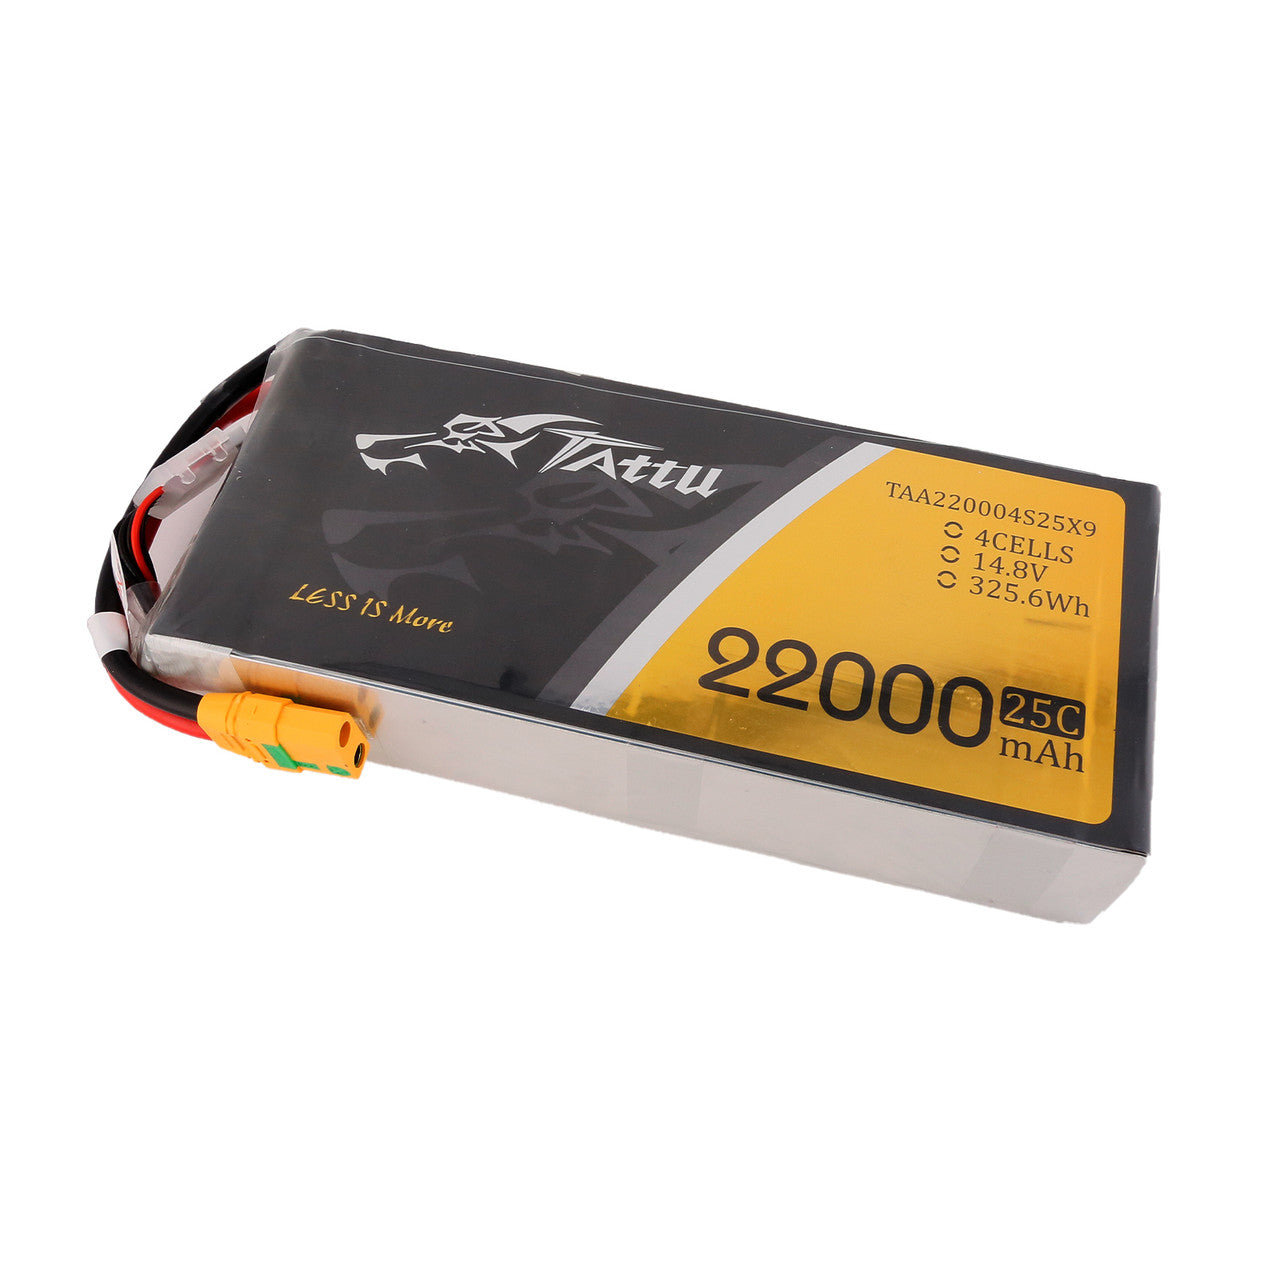 Tattu G-Tech 4S 22000mAh 14.8V 25C Lipo Battery, High-capacity Li-ion battery with 22,000mAh power and XT90-S plug for drone use.